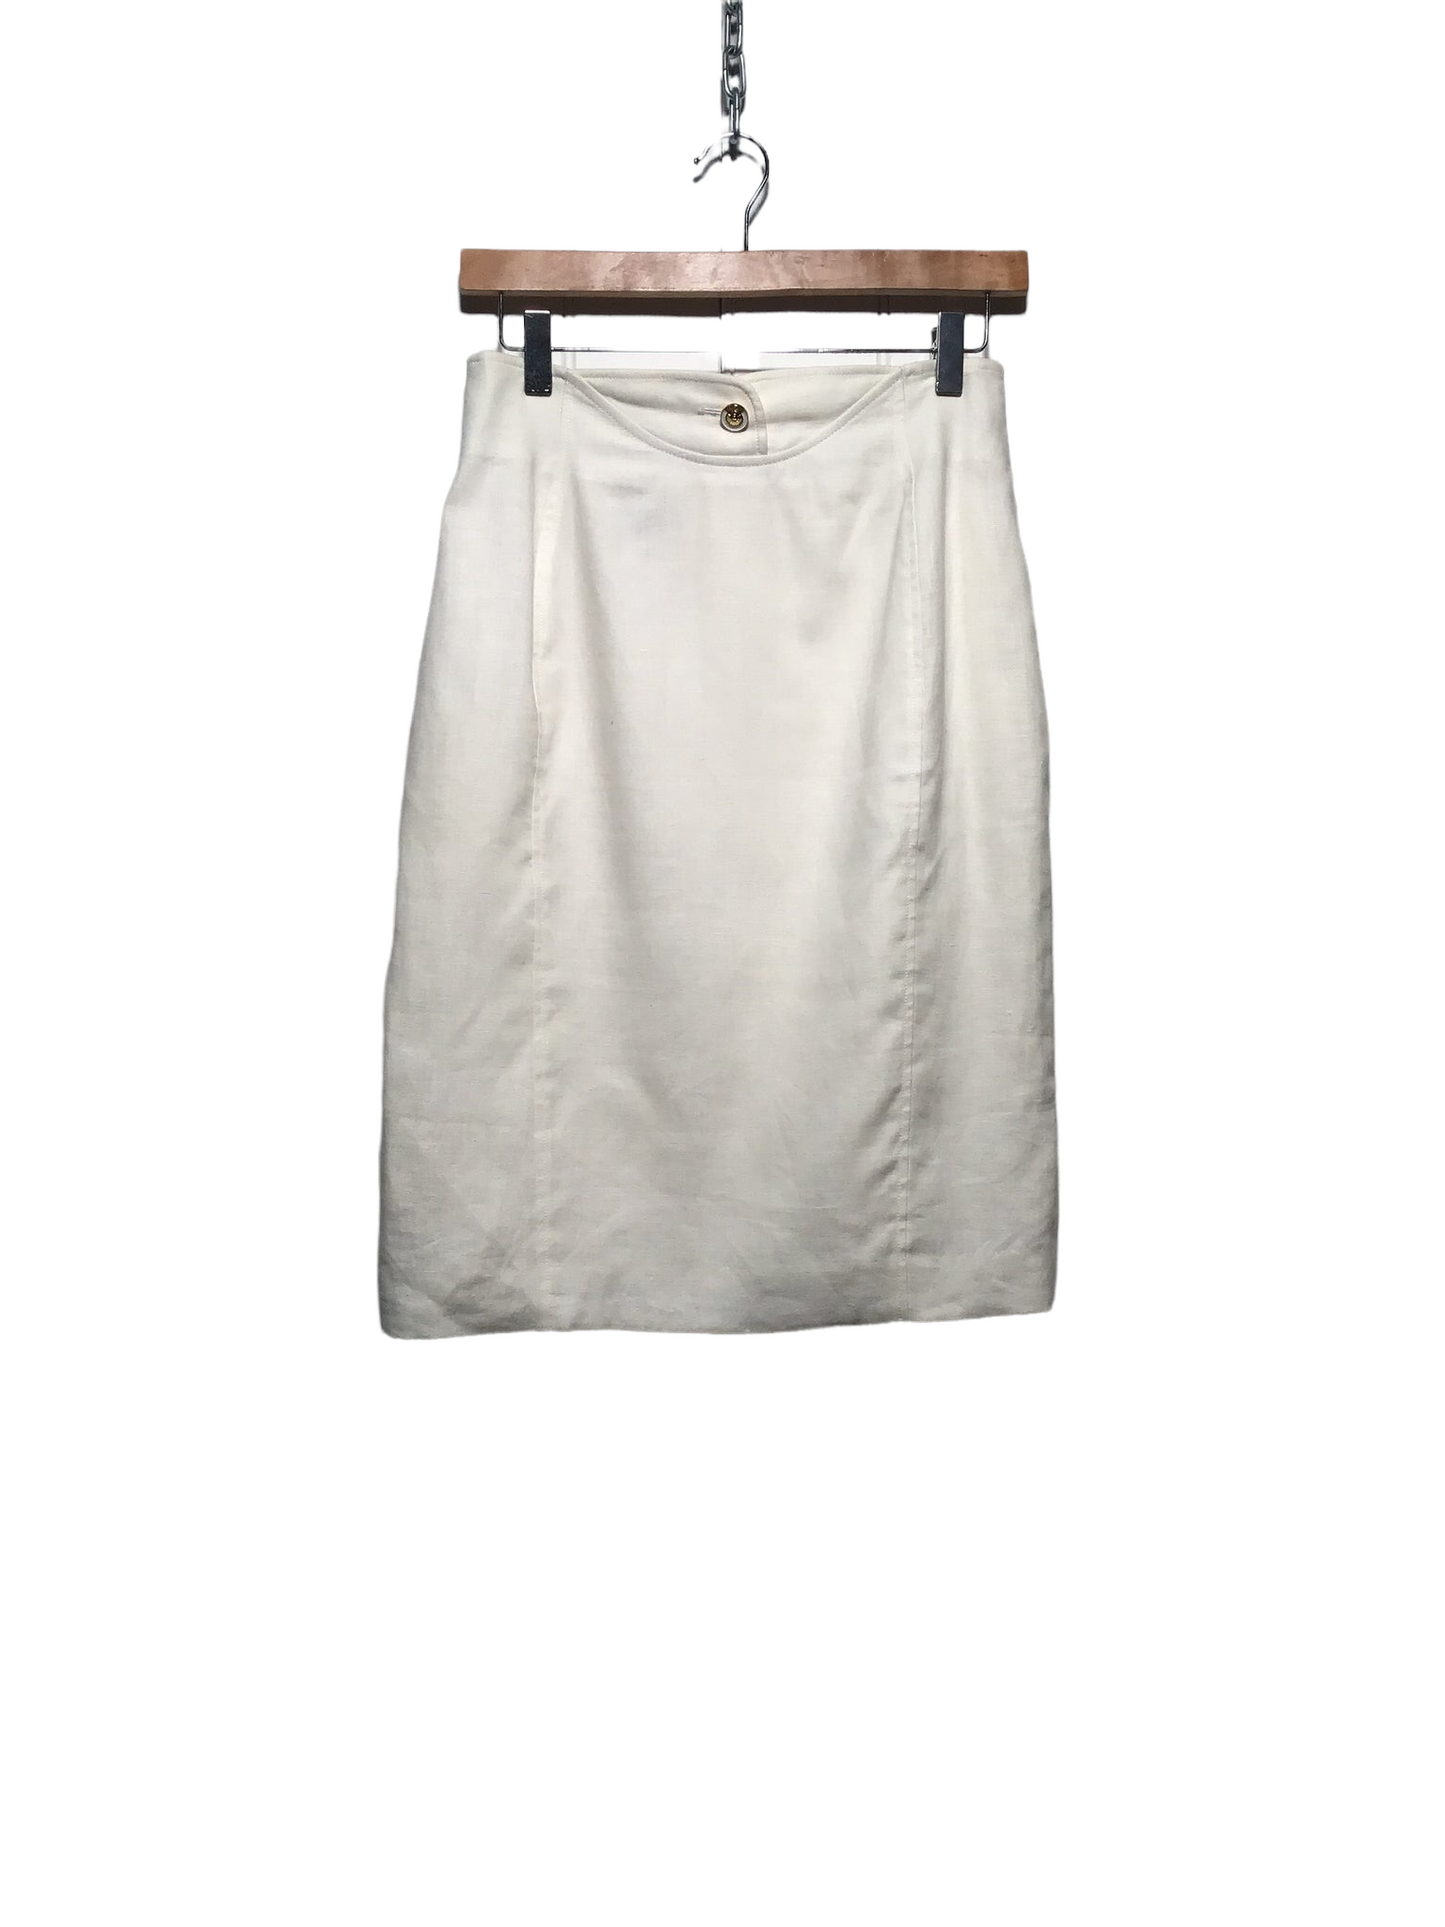 Louis Féraud Pencil Skirt (Size S)